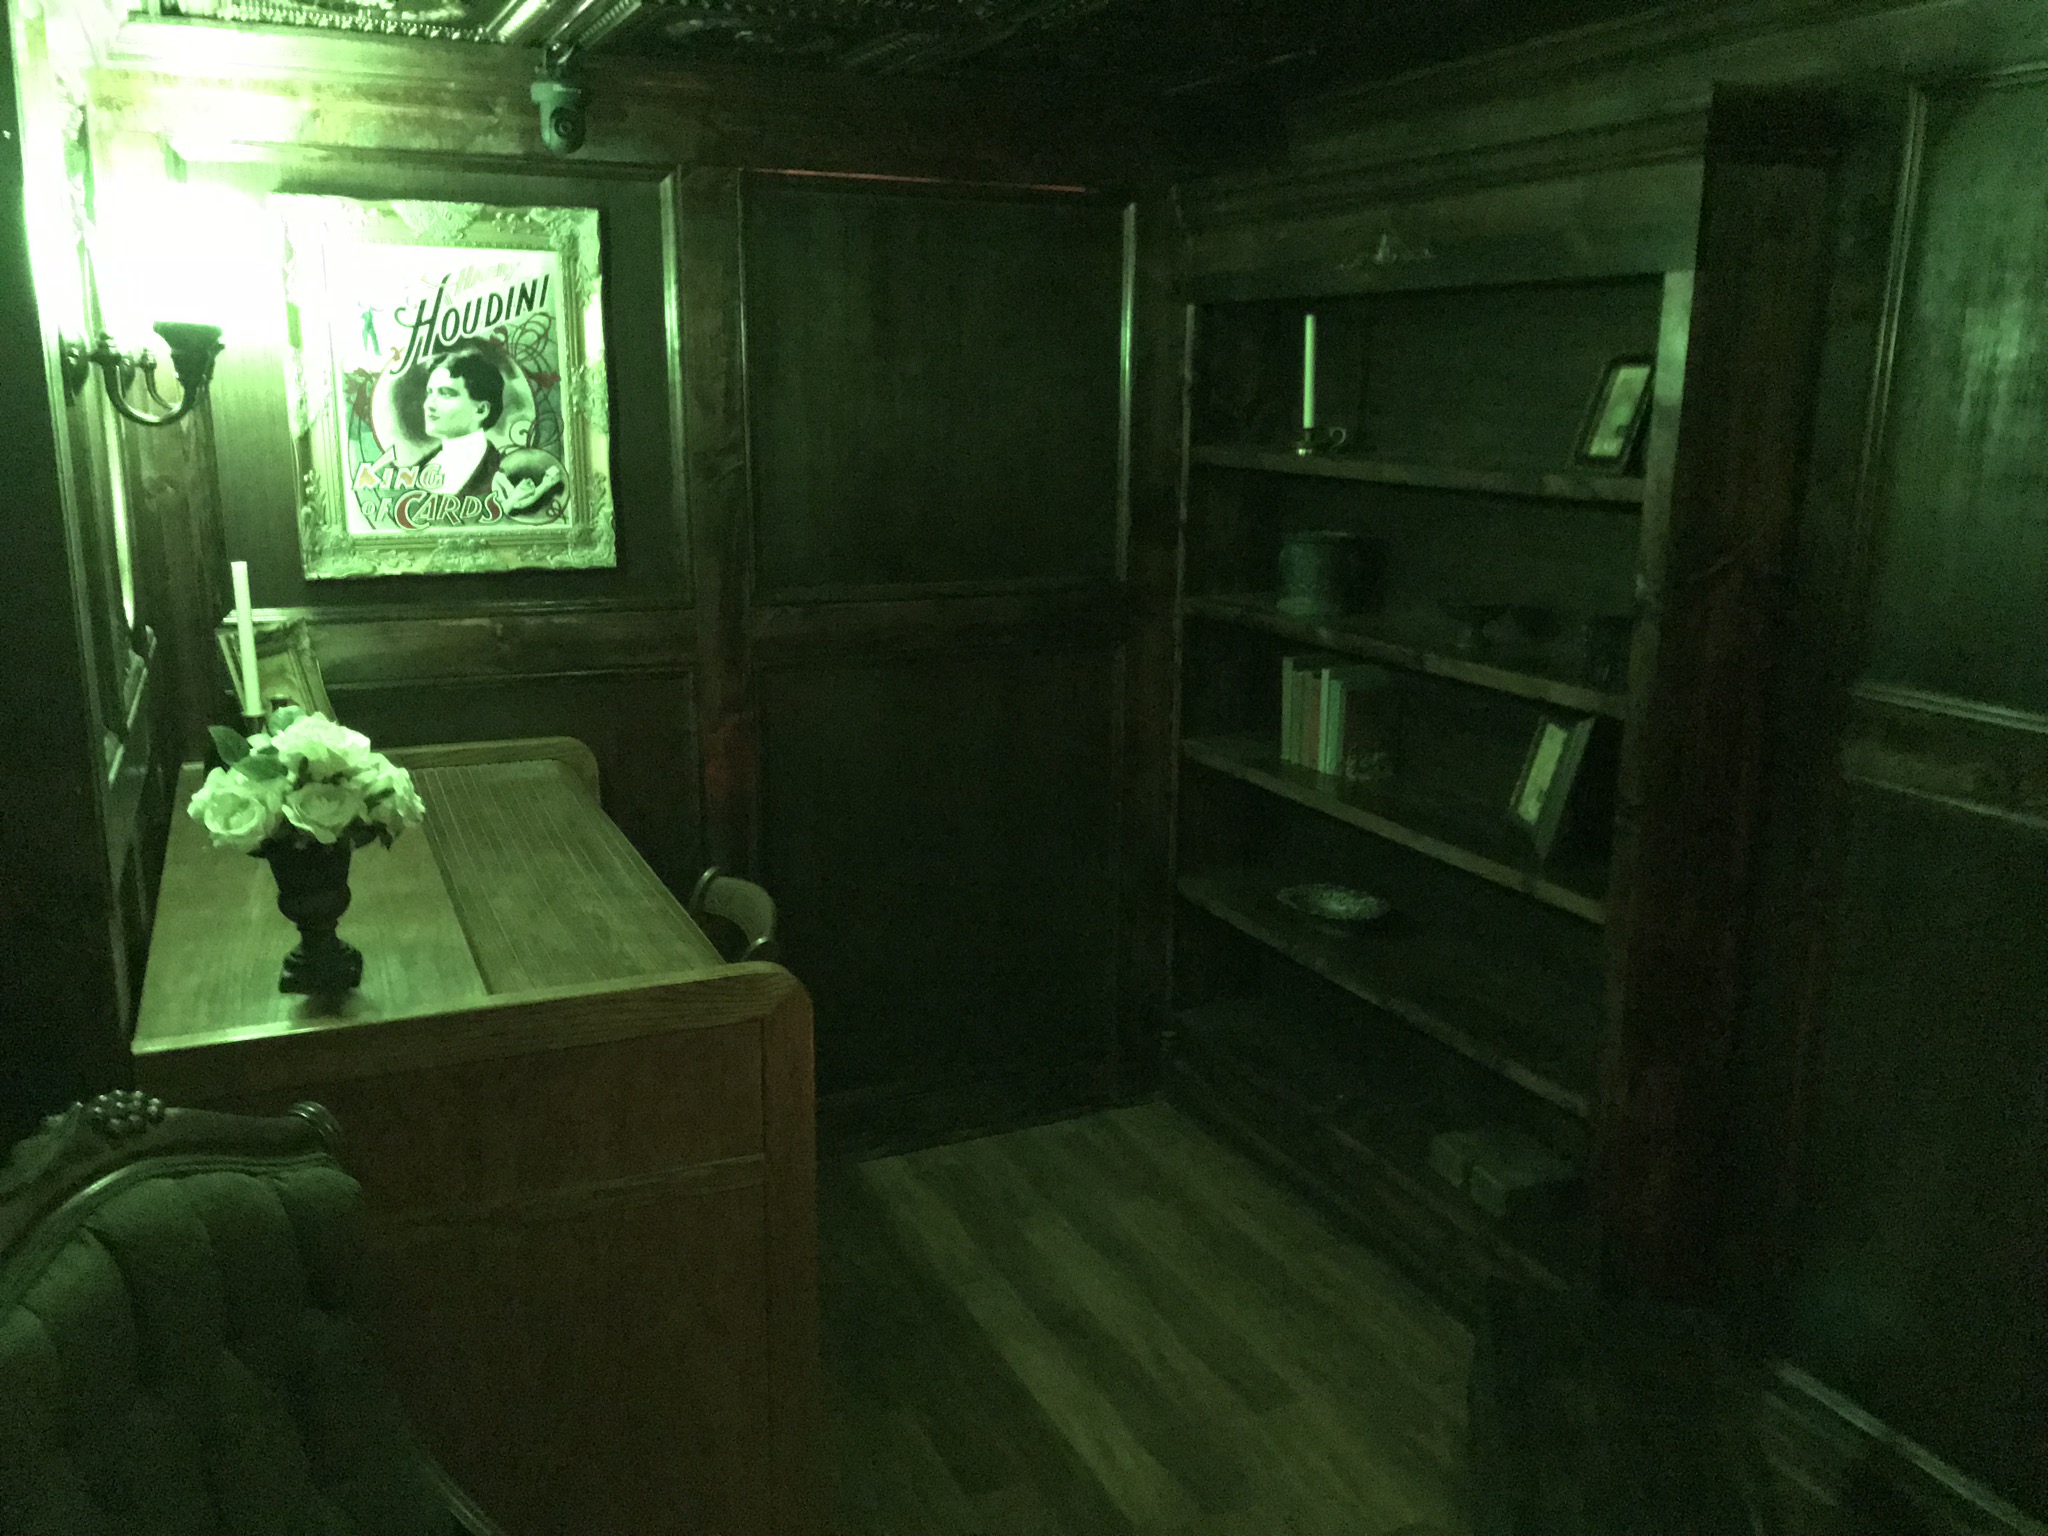 Houdini's Challenge - One Exit Mobile Escape Room